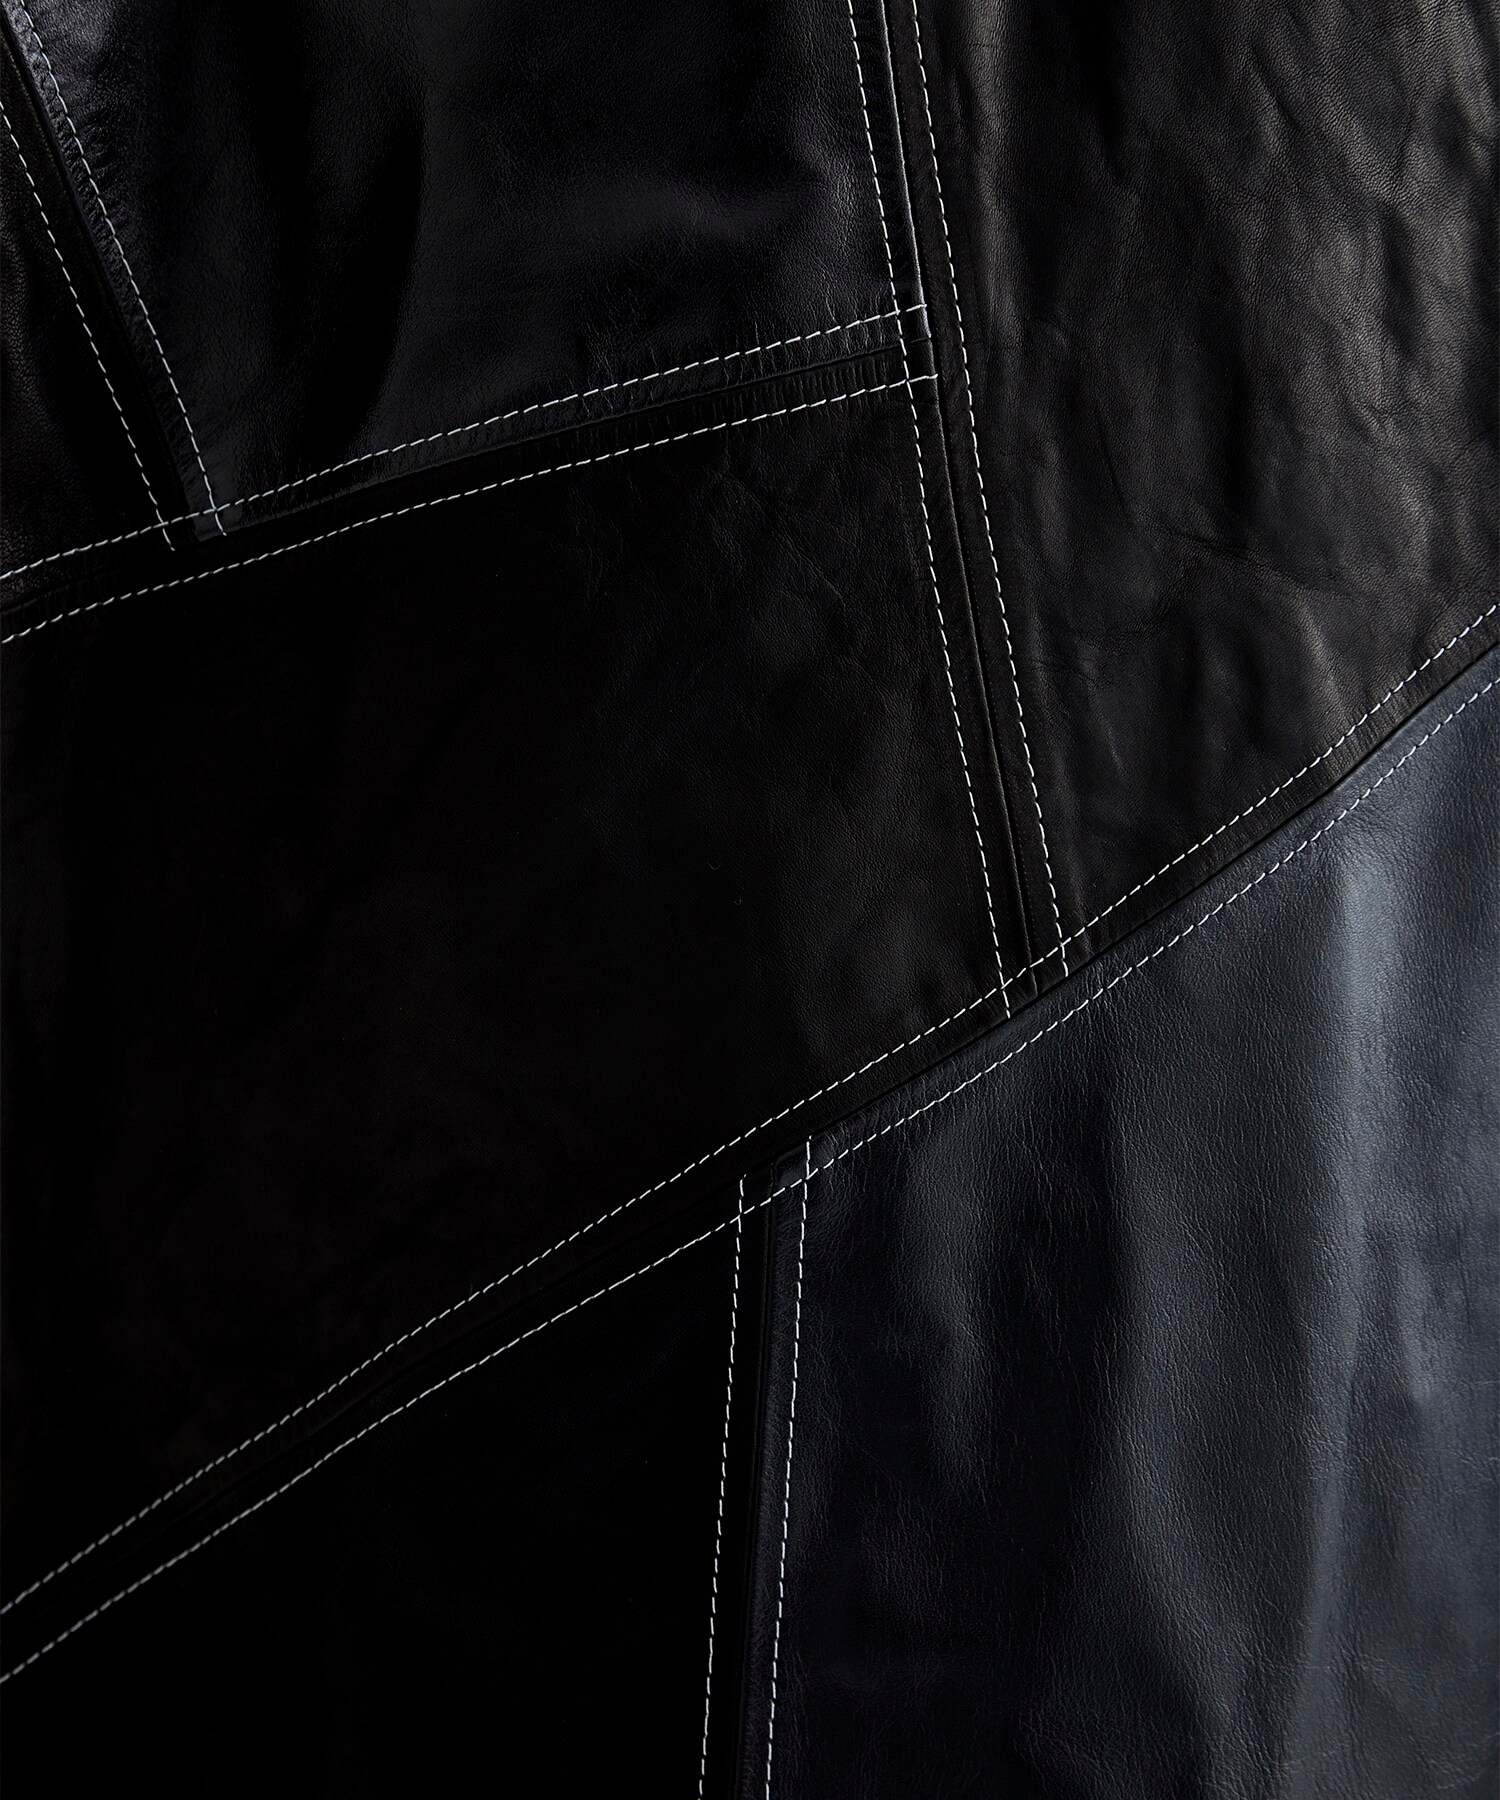 Assort leather patch work coat sulvam